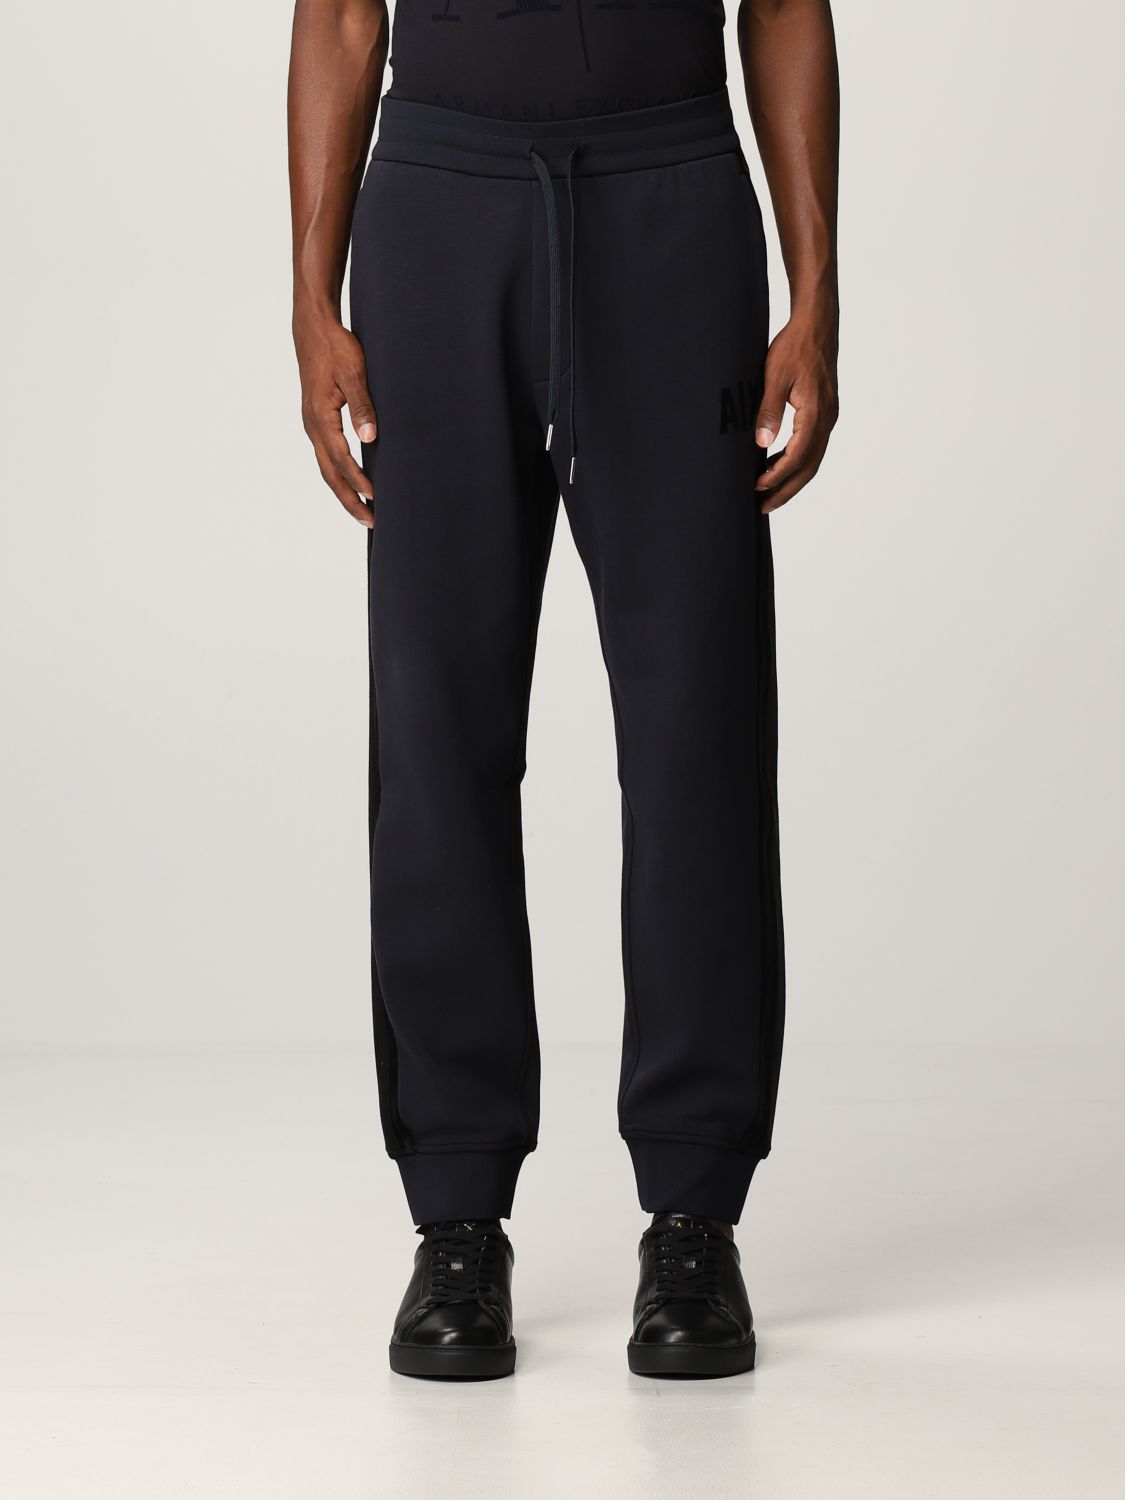 ARMANI EXCHANGE: cotton jogging pants with logo - Navy | Armani ...